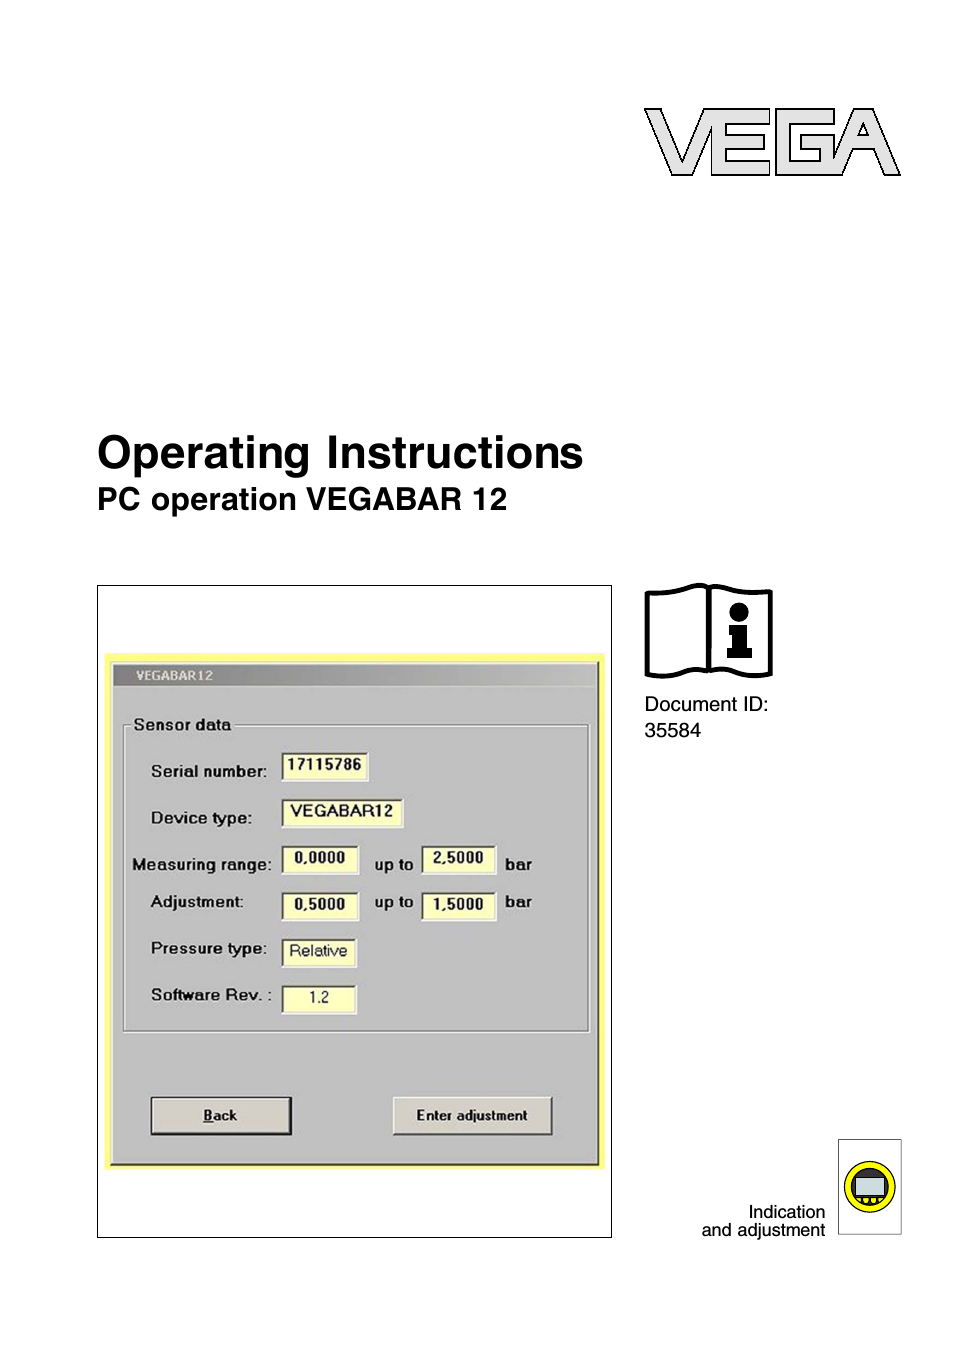 VEGABAR 12 PC operation